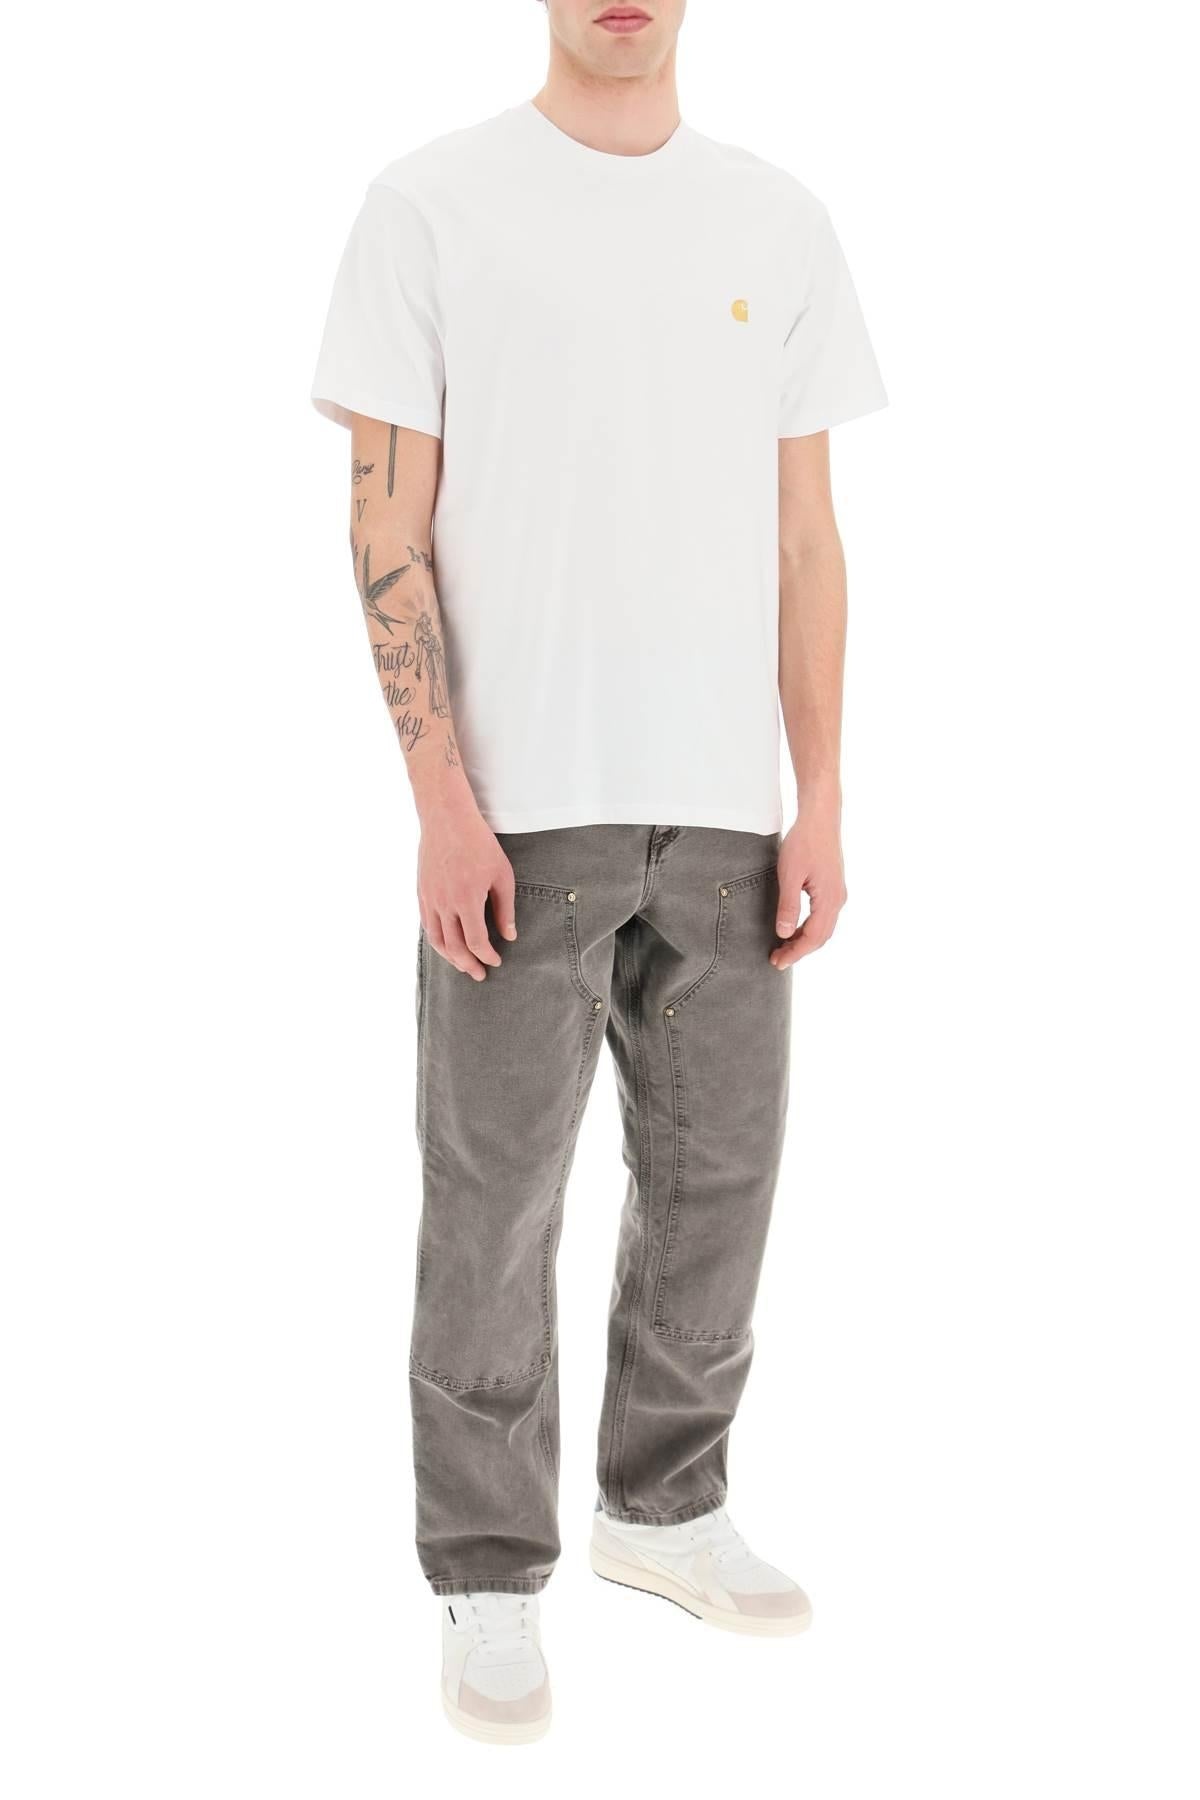 Carhartt Wip Chase Oversized T Shirt - 2